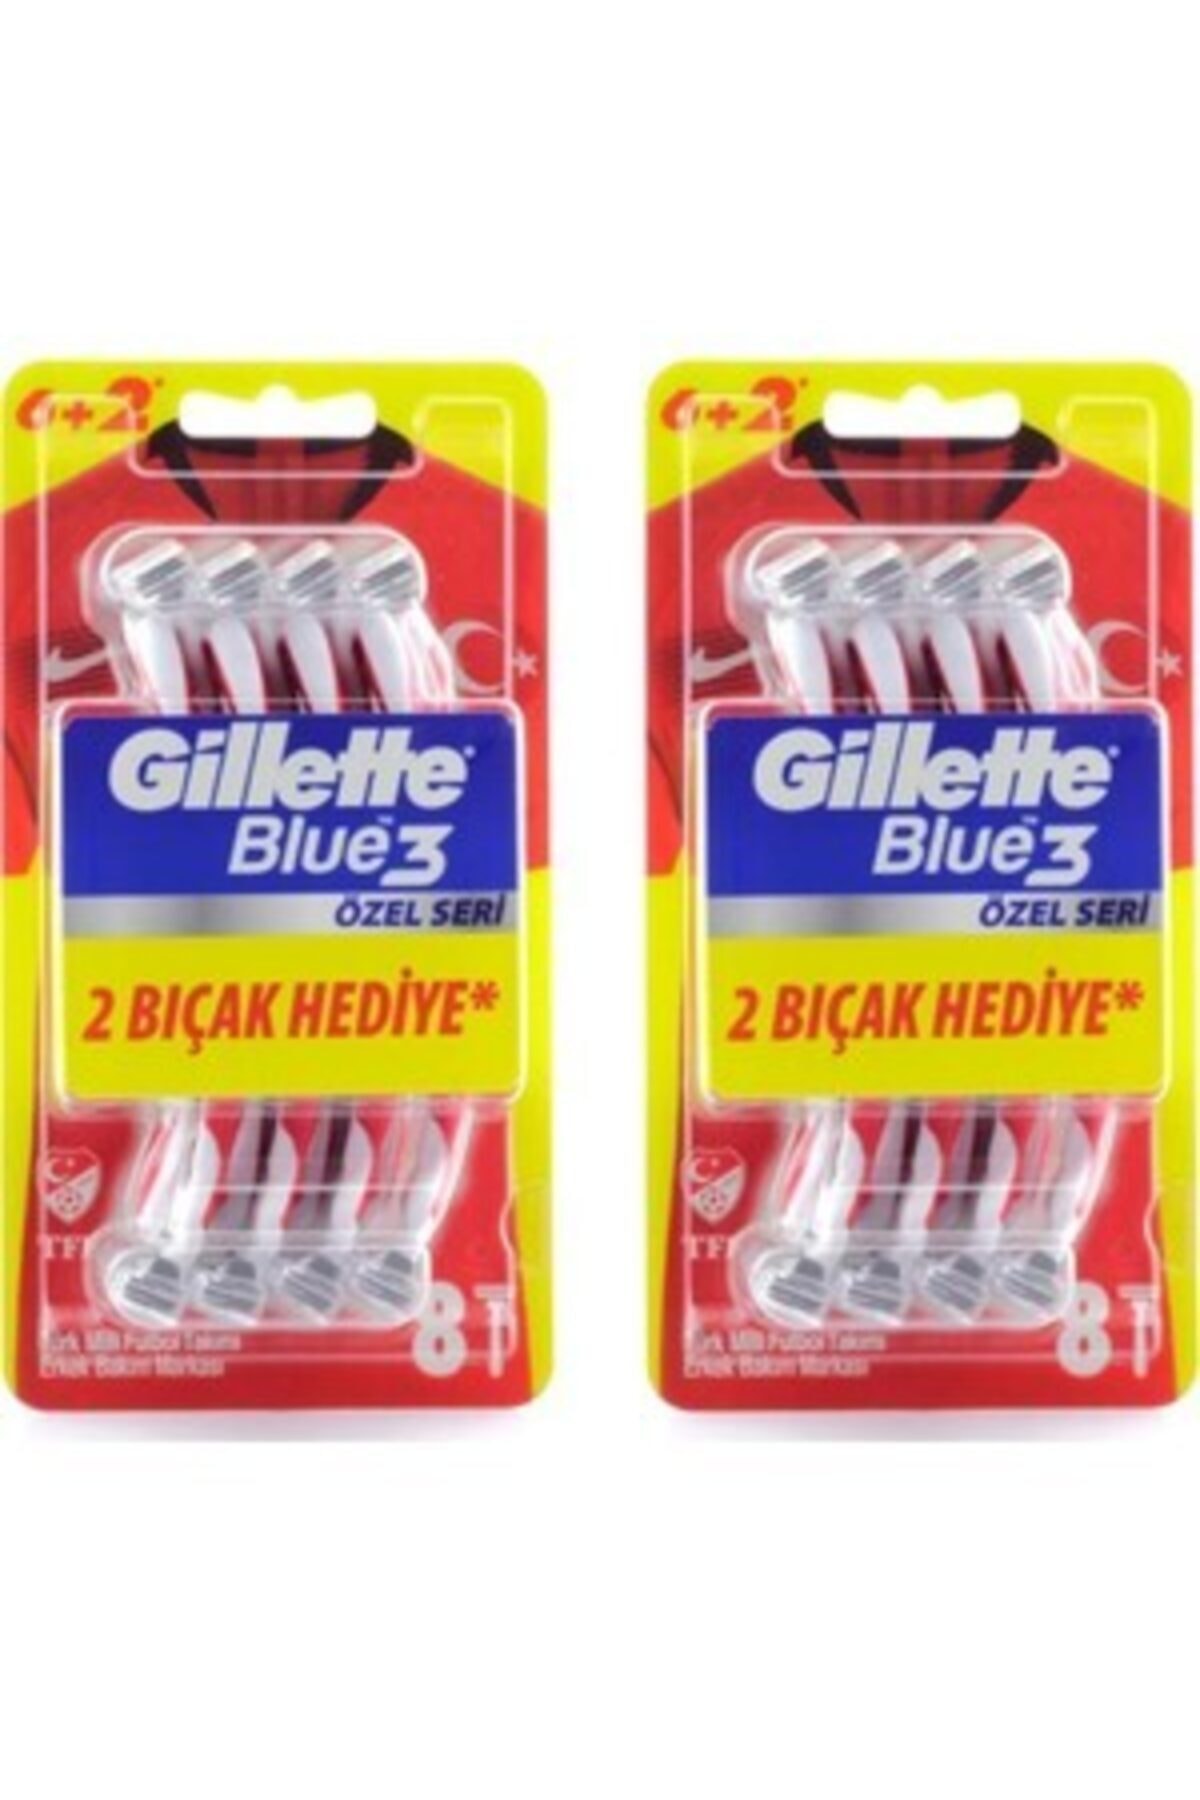 Gillette Blue3 Pride Tıraş Bıçağı 6+2'li Özel Seri X2 Paket